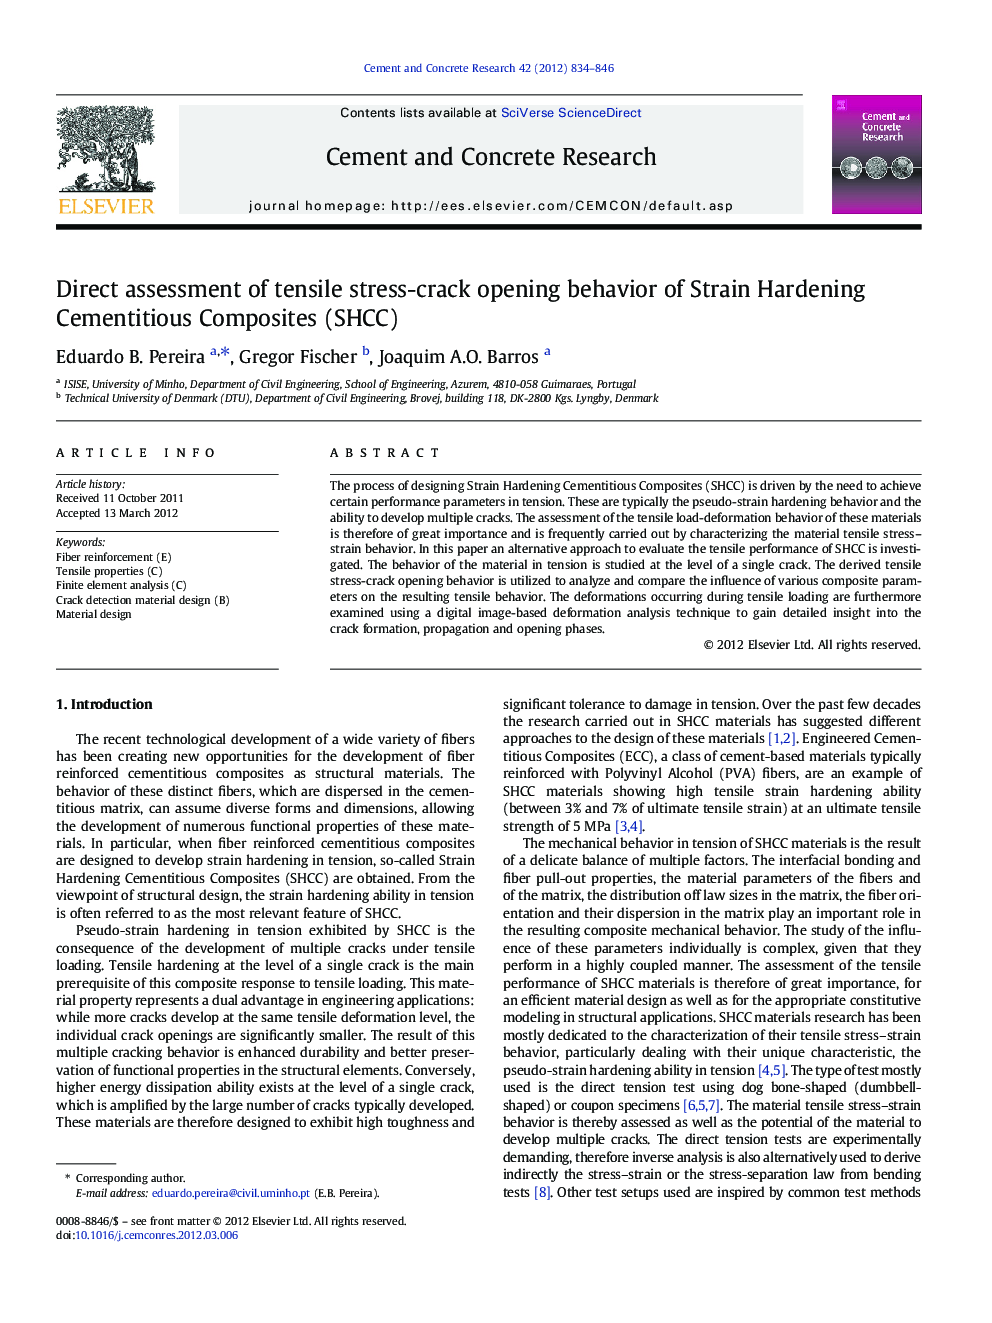 Direct assessment of tensile stress-crack opening behavior of Strain Hardening Cementitious Composites (SHCC)